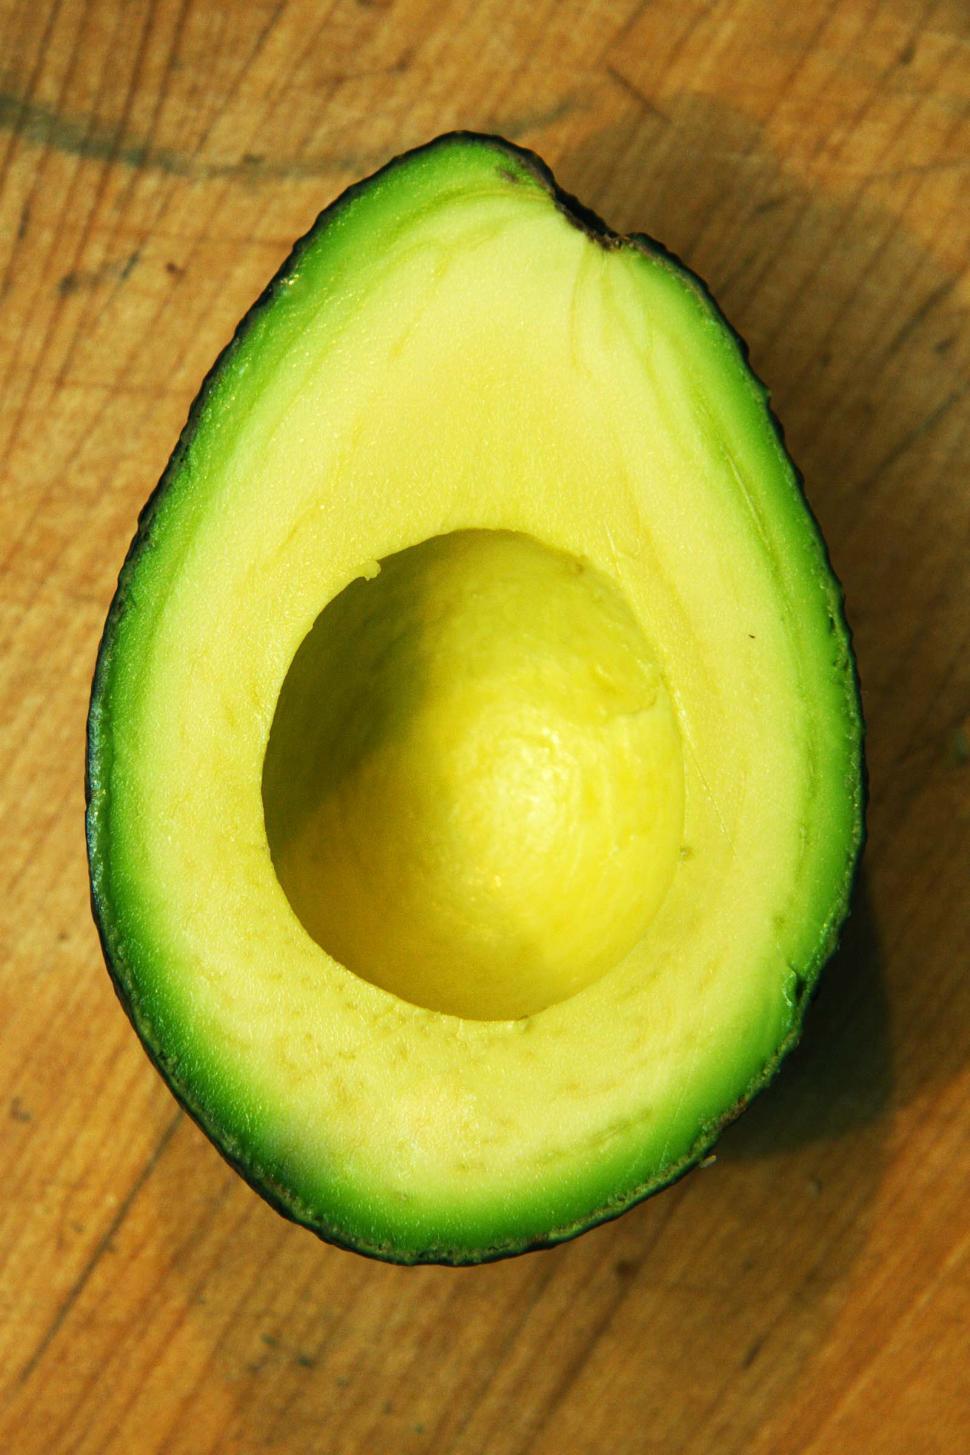 Free Image of Half an avocado 